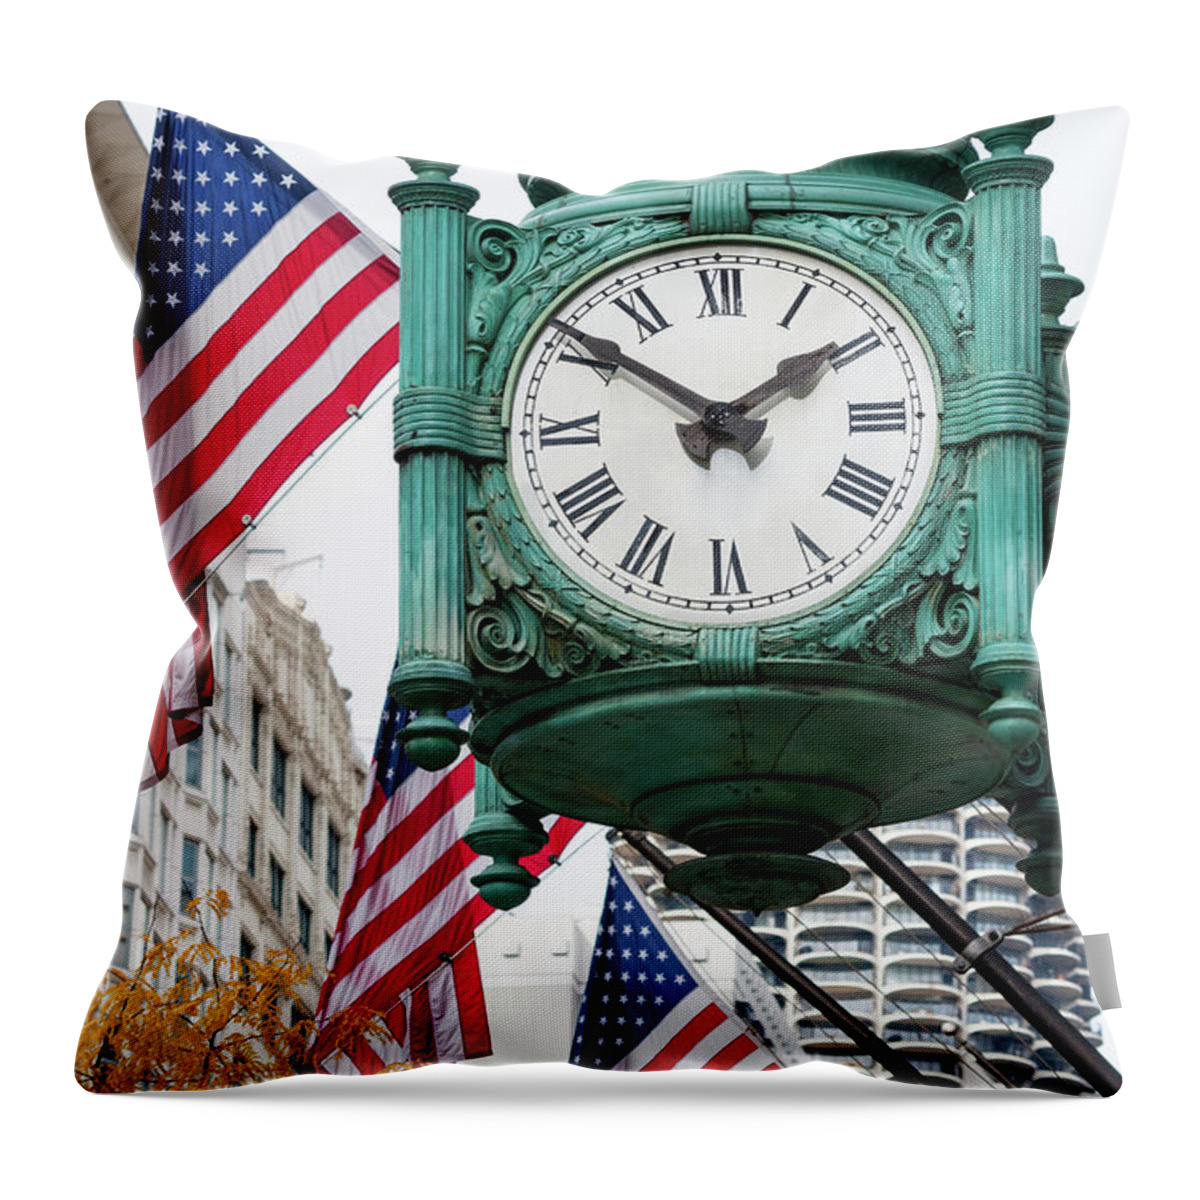 Marshall Field's Great Clock Throw Pillow featuring the photograph Marshall Field's Great Clock by Patty Colabuono